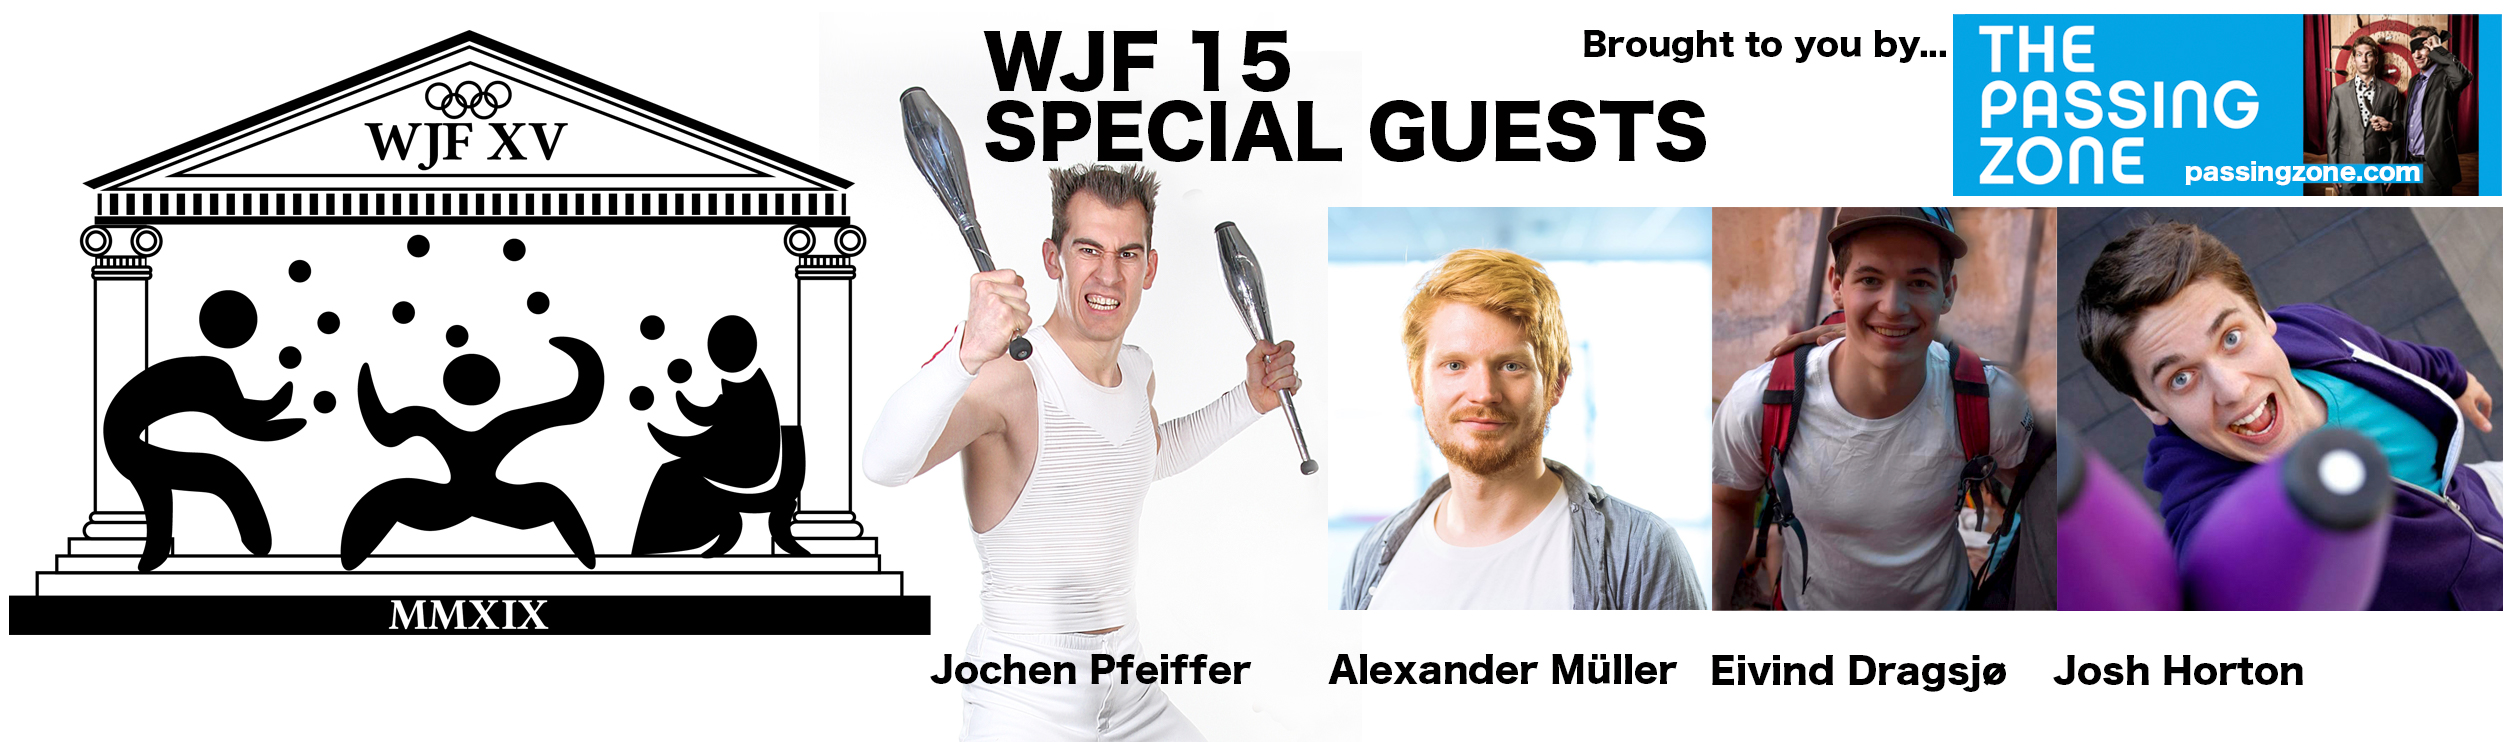 WJF15_Guests